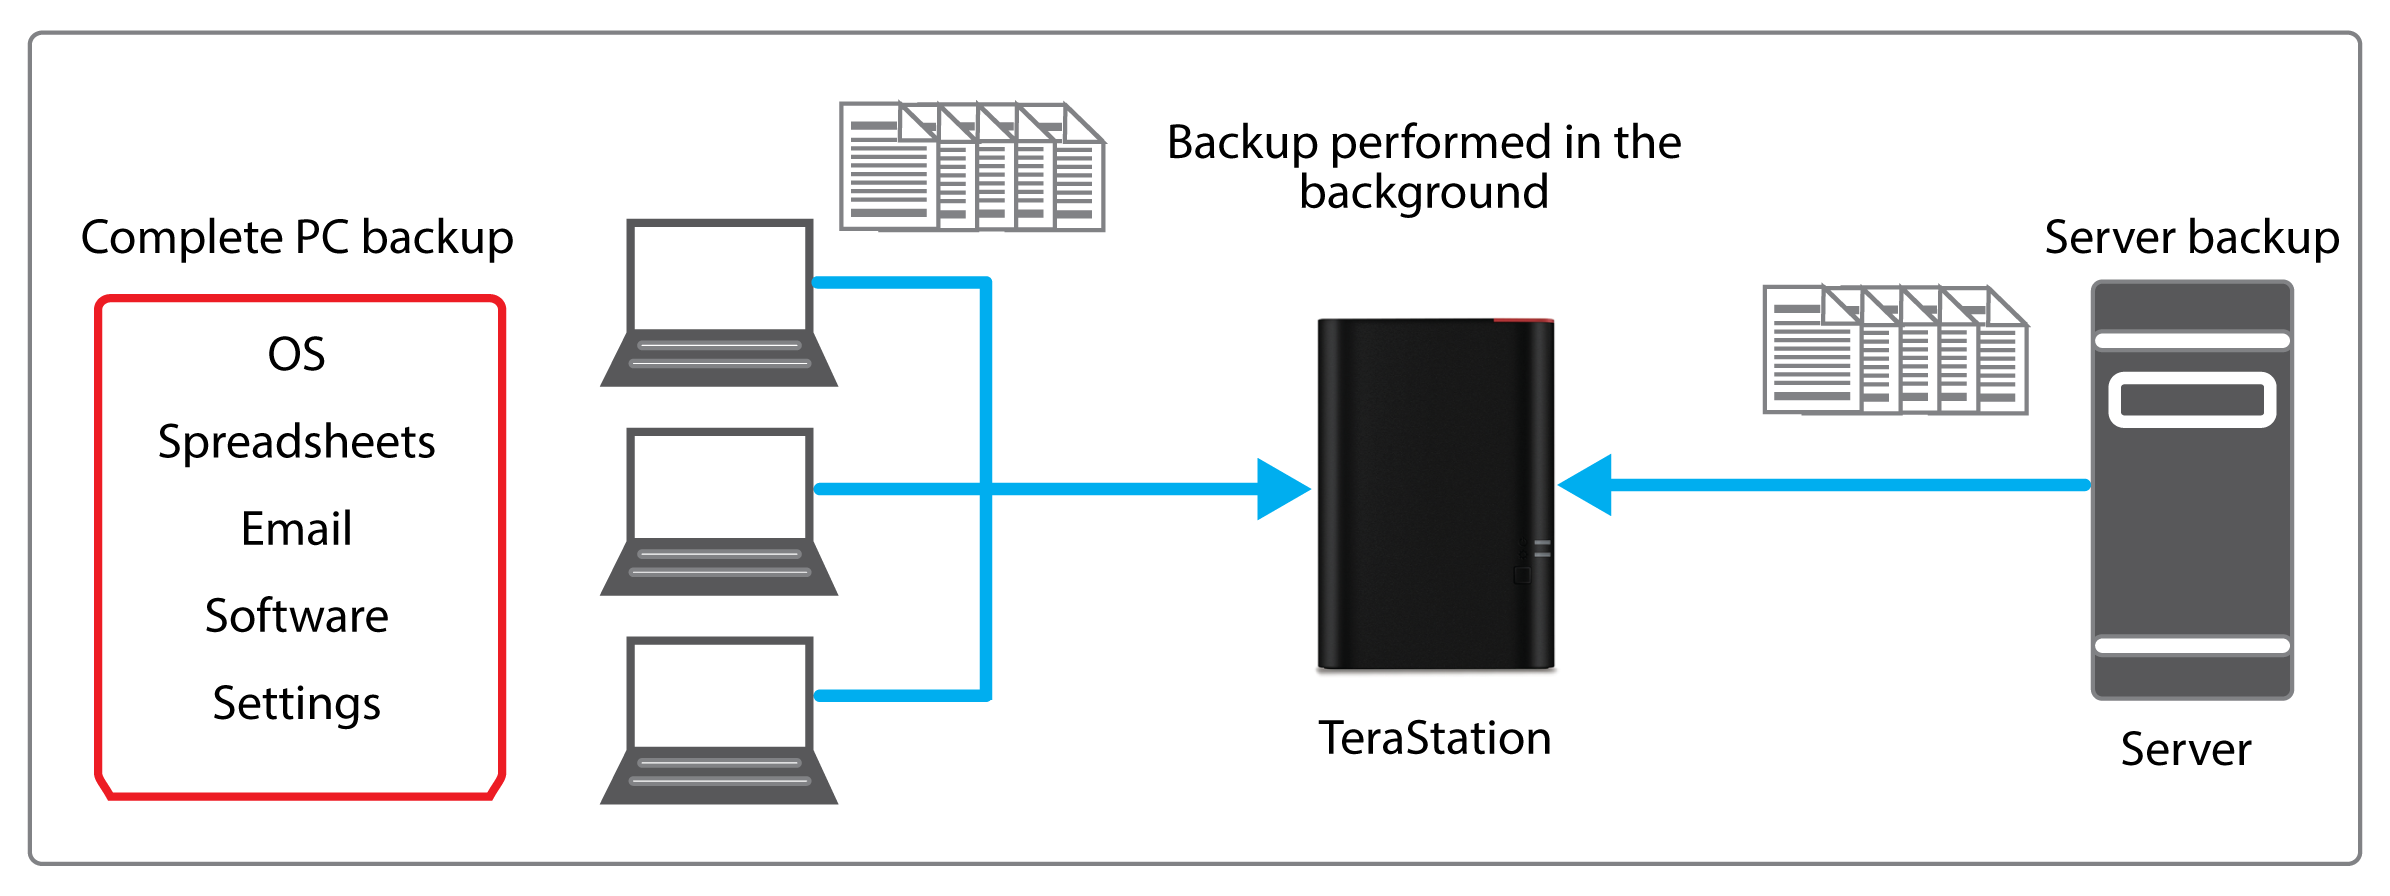 terastation 1000 data protection and backup